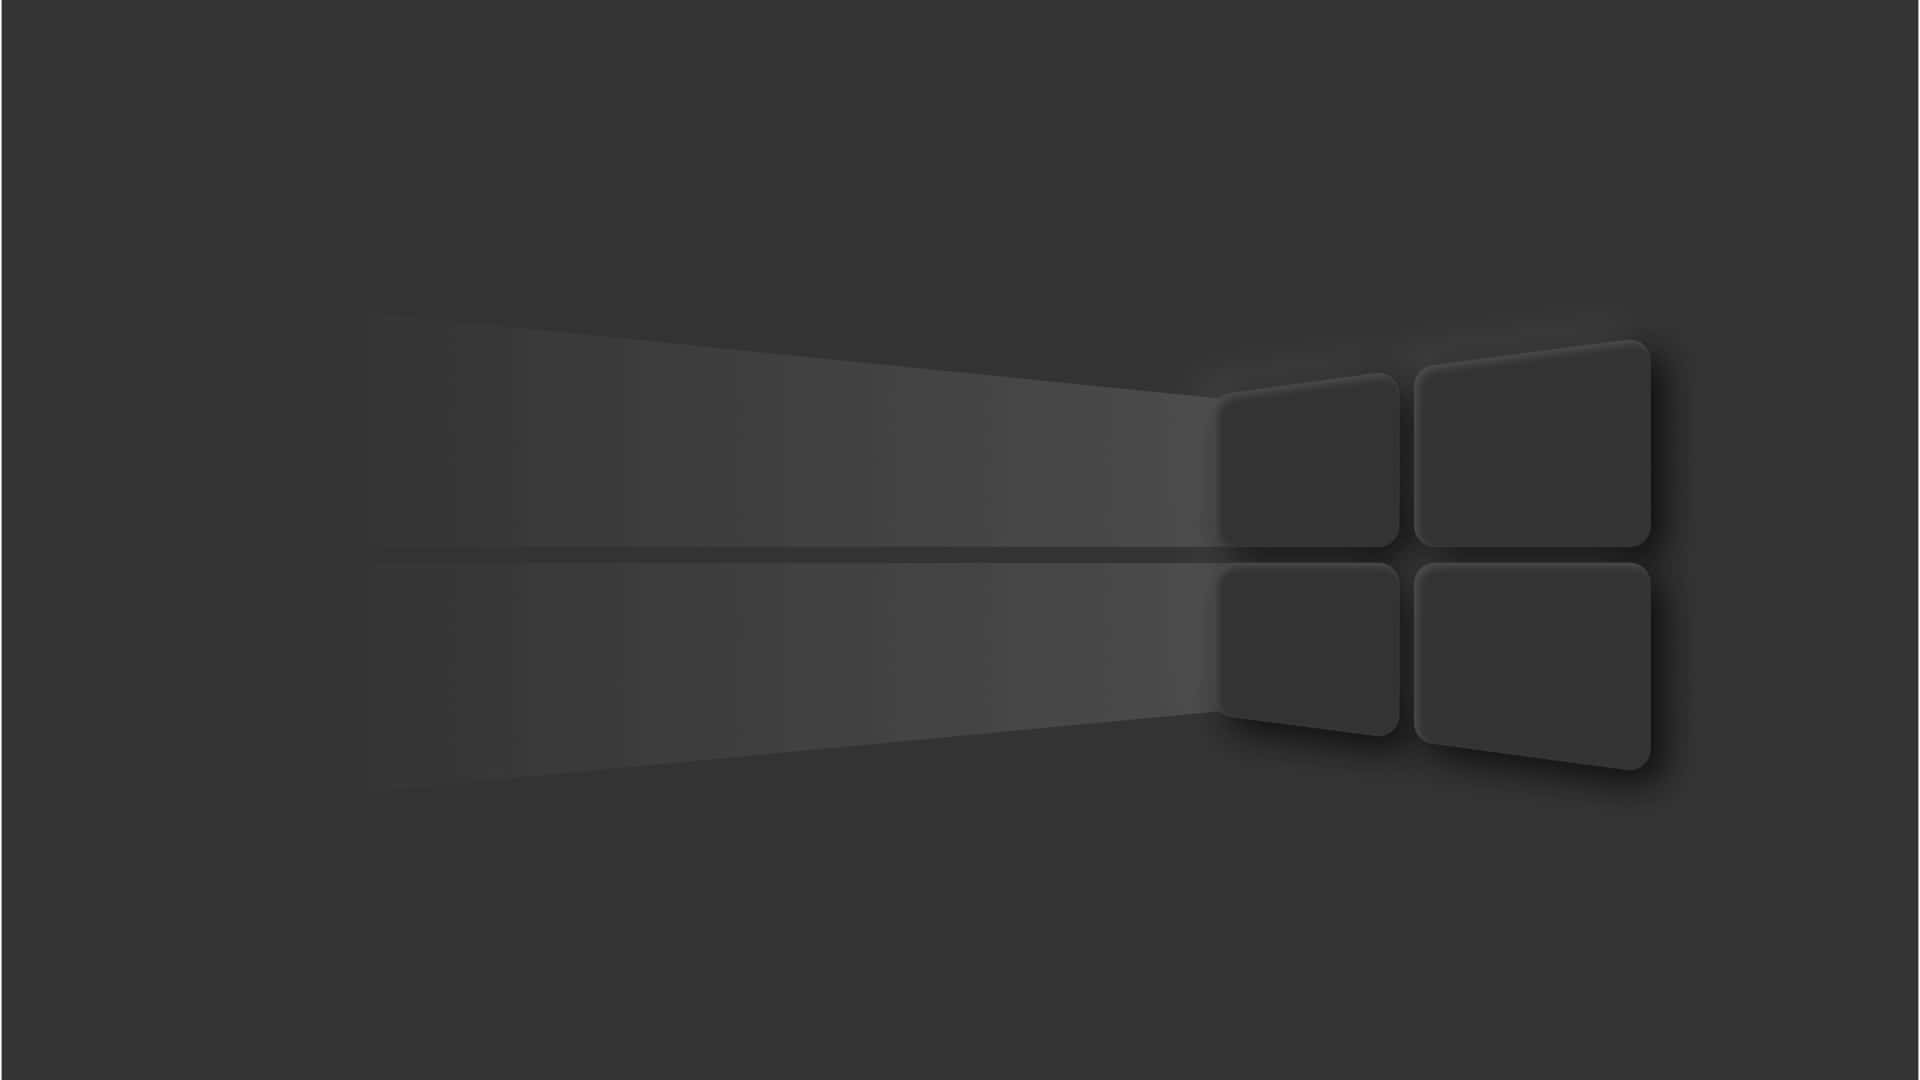 Windows 10 Logo On A Black Background Wallpaper